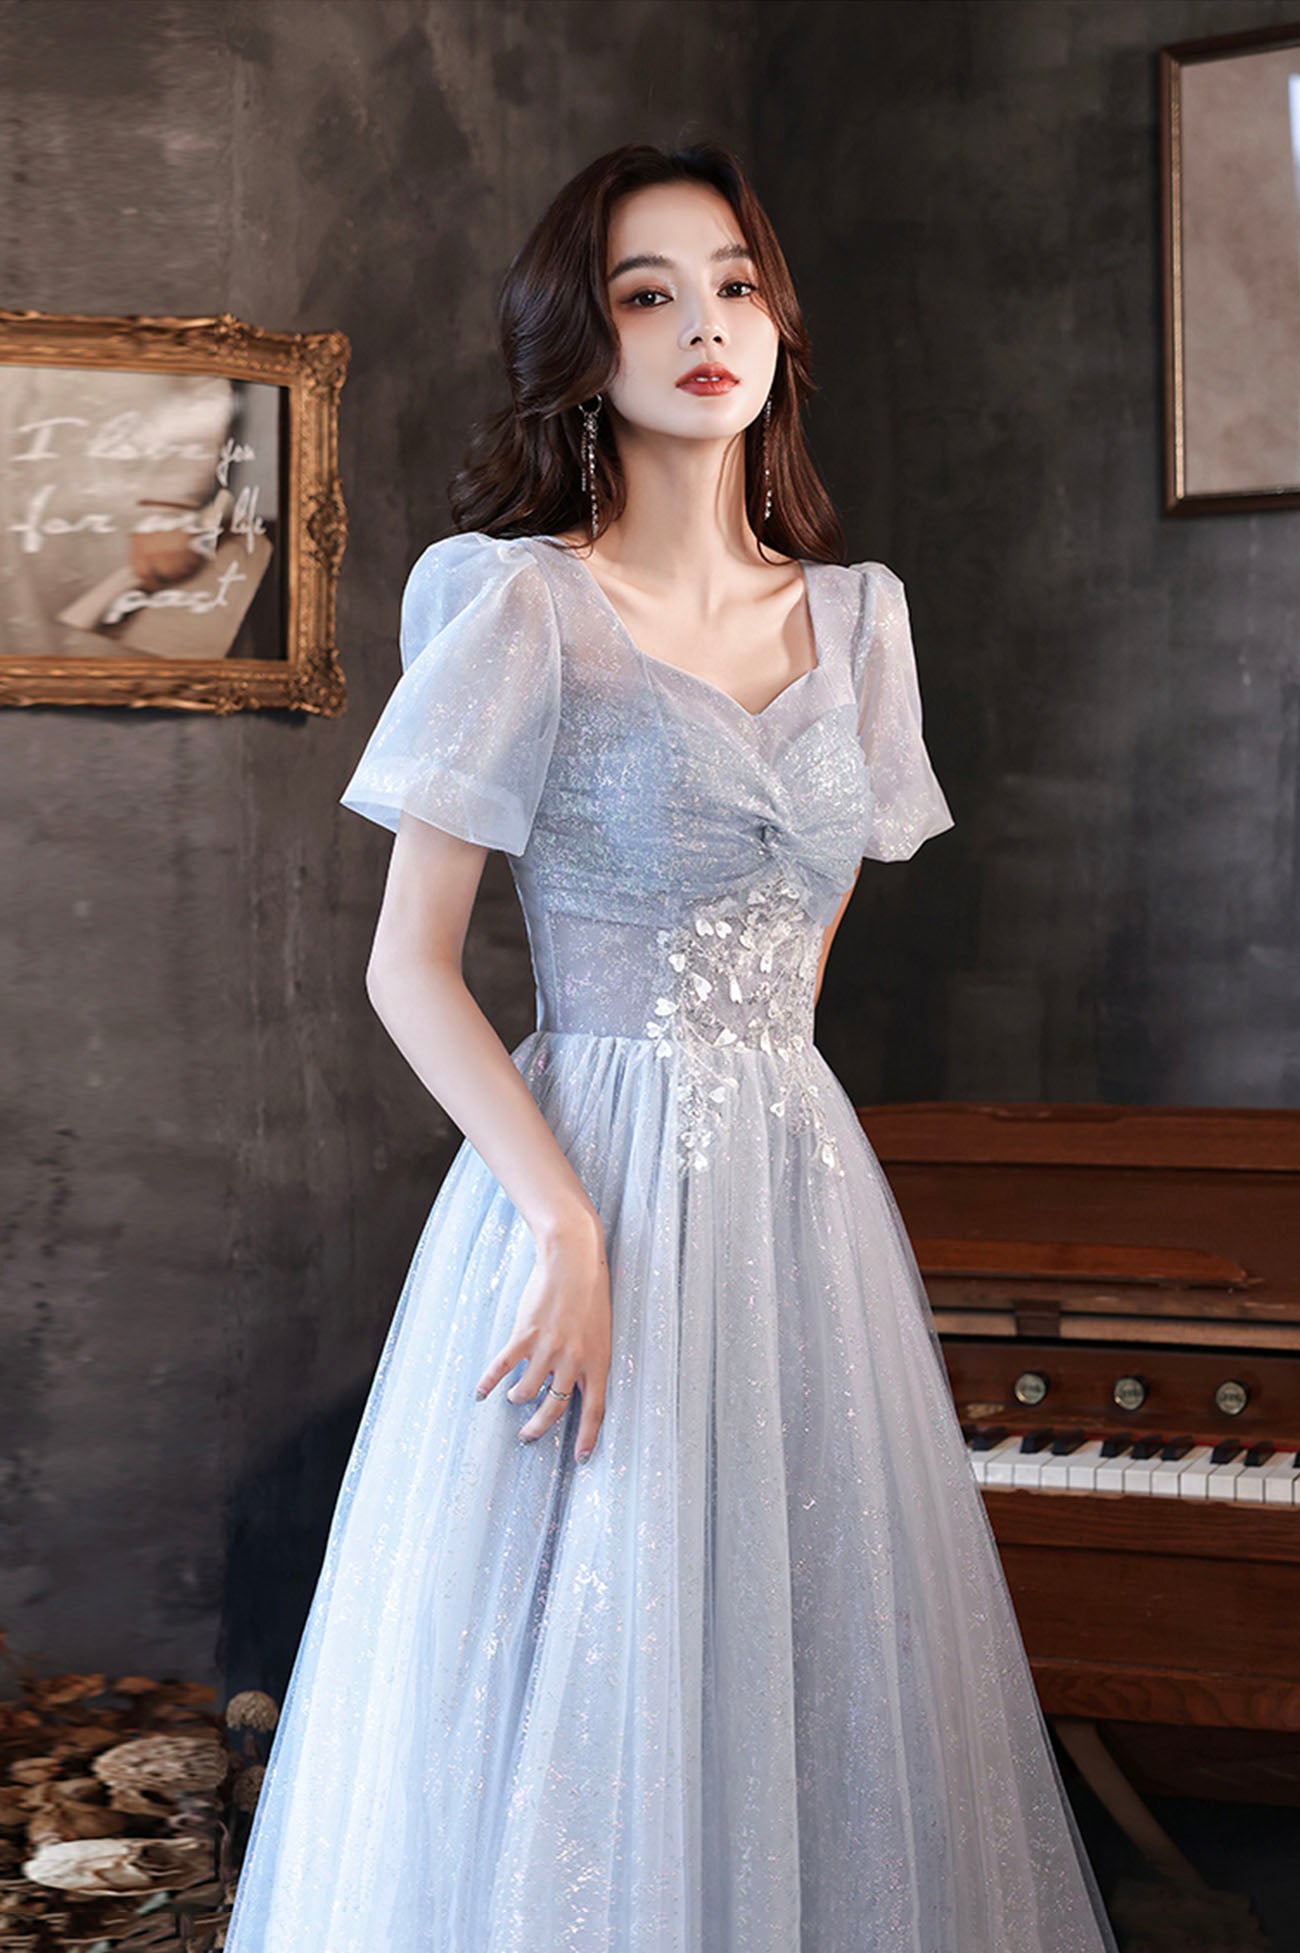 Blue Shiny Tulle Long A-Line Prom Dress, Blue Short Sleeve Evening Dress